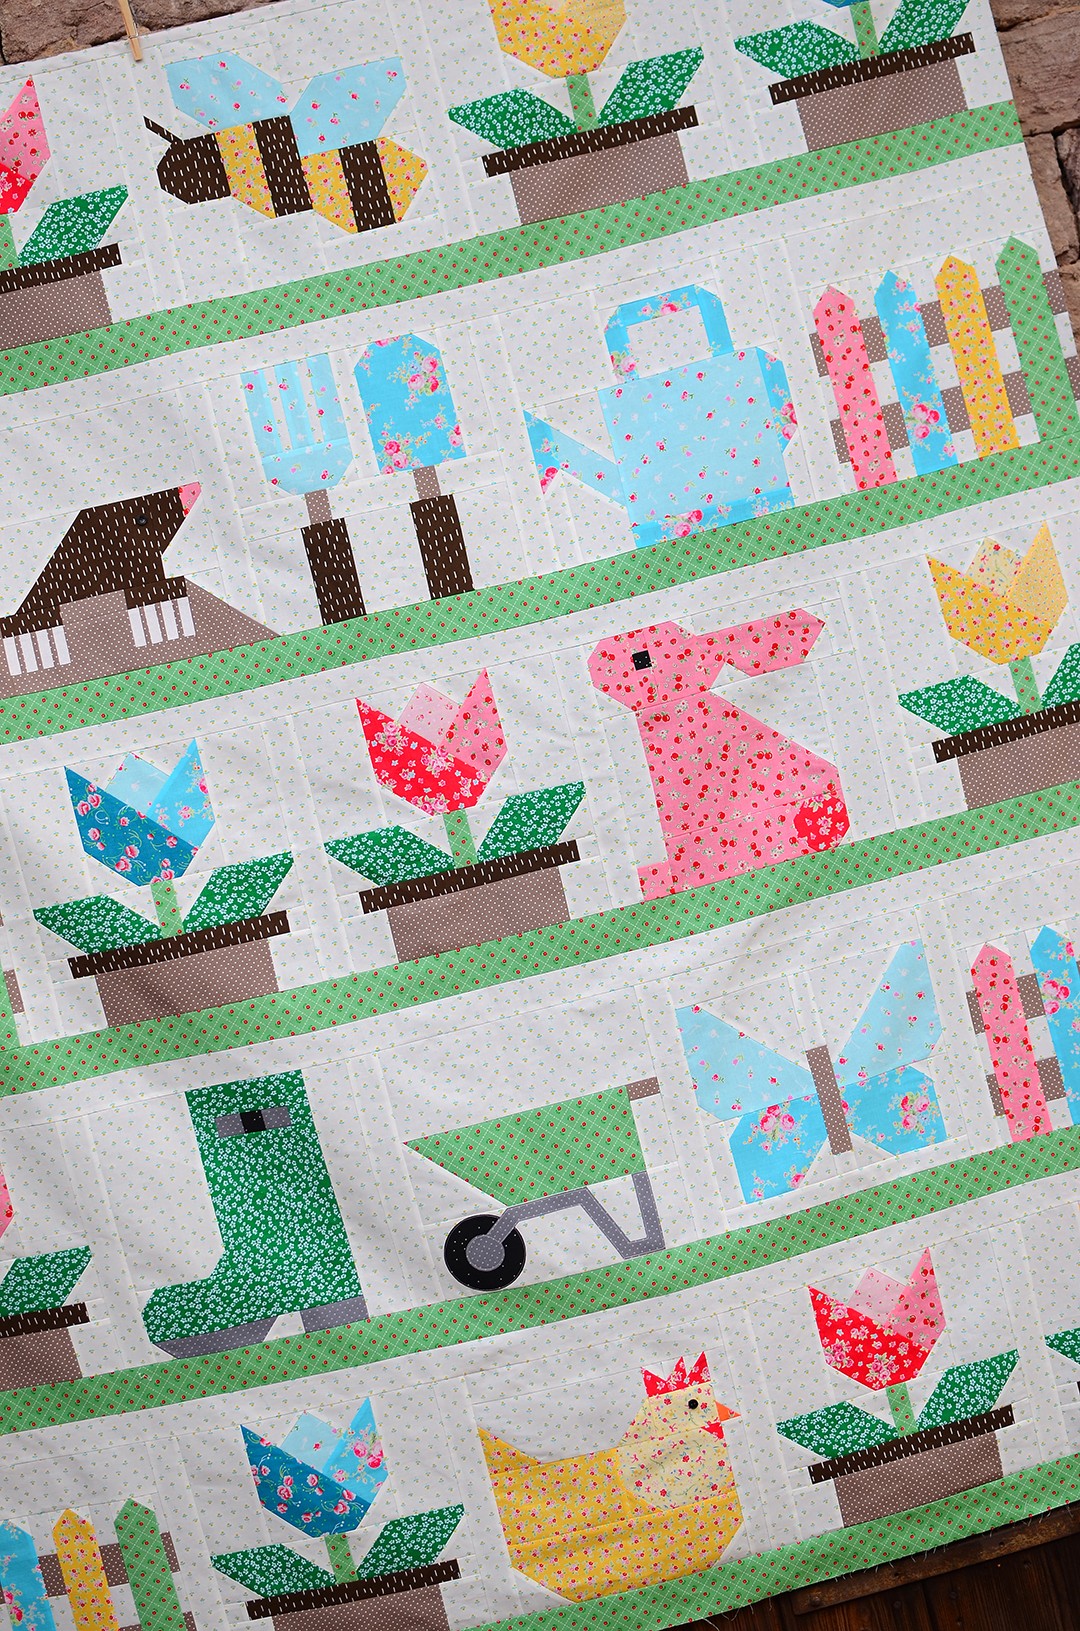 Country Garden Spring quilt pattern